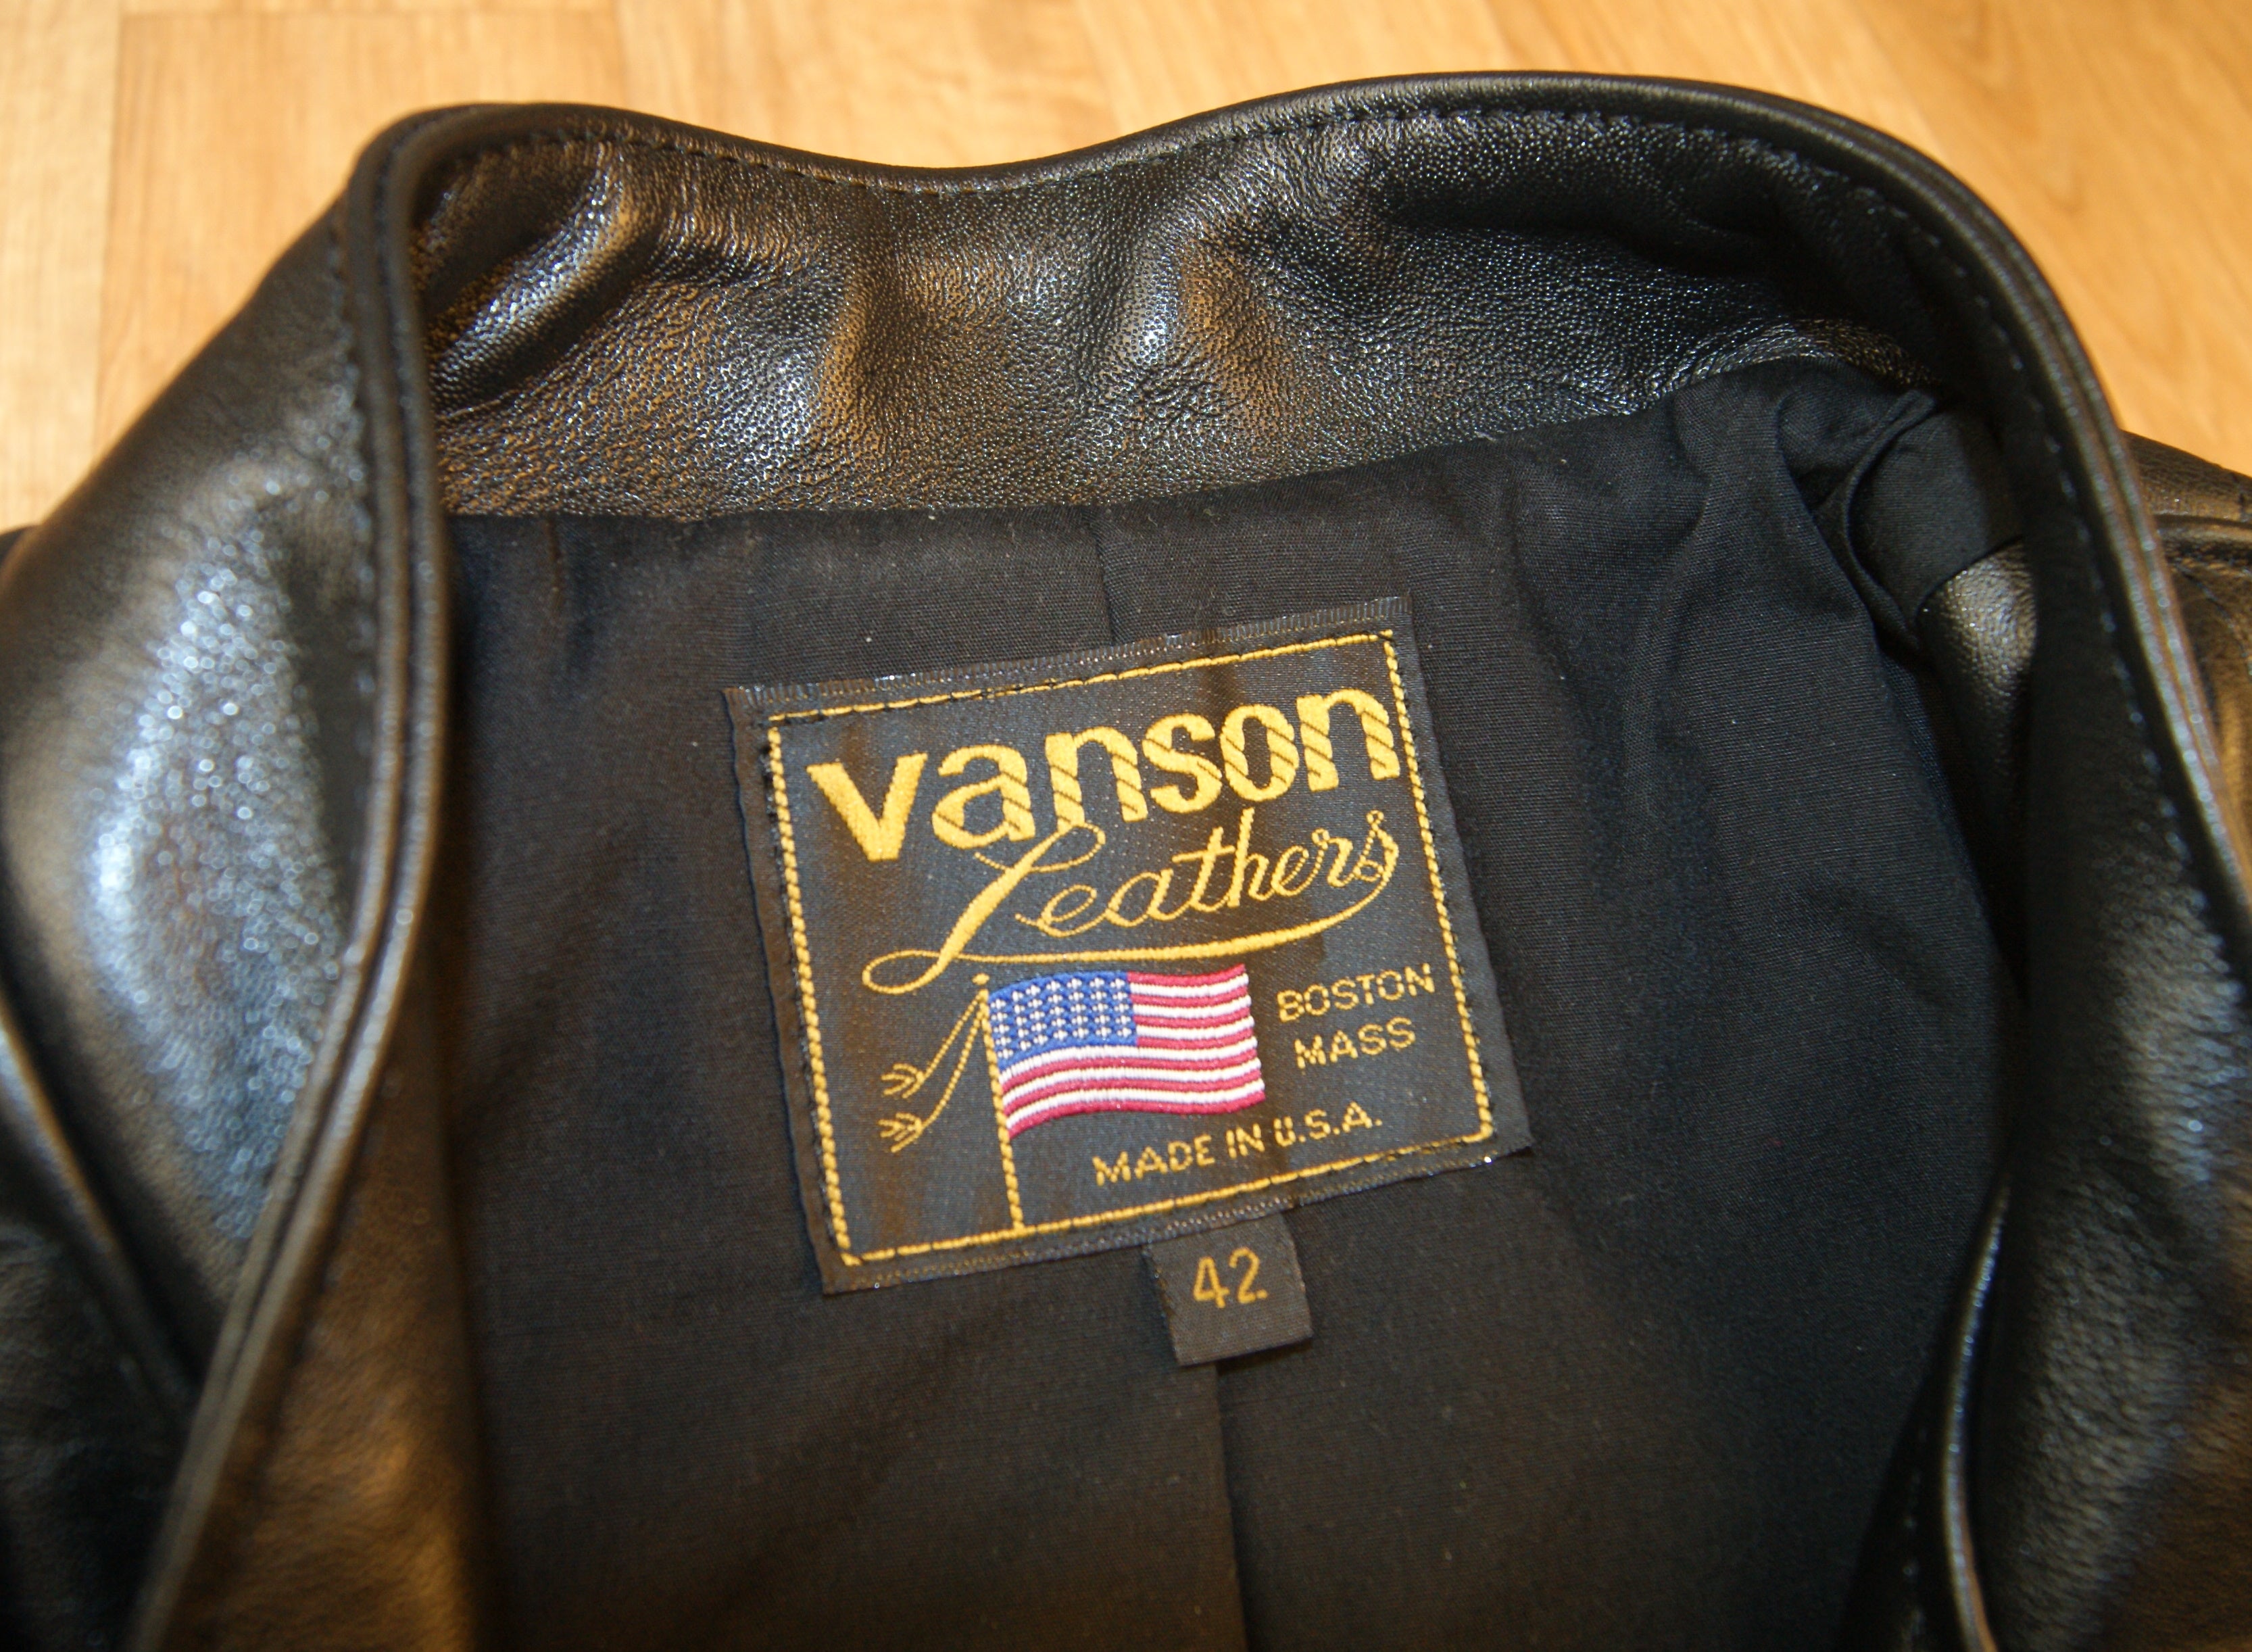 Vanson Chopper Jacket, size 42